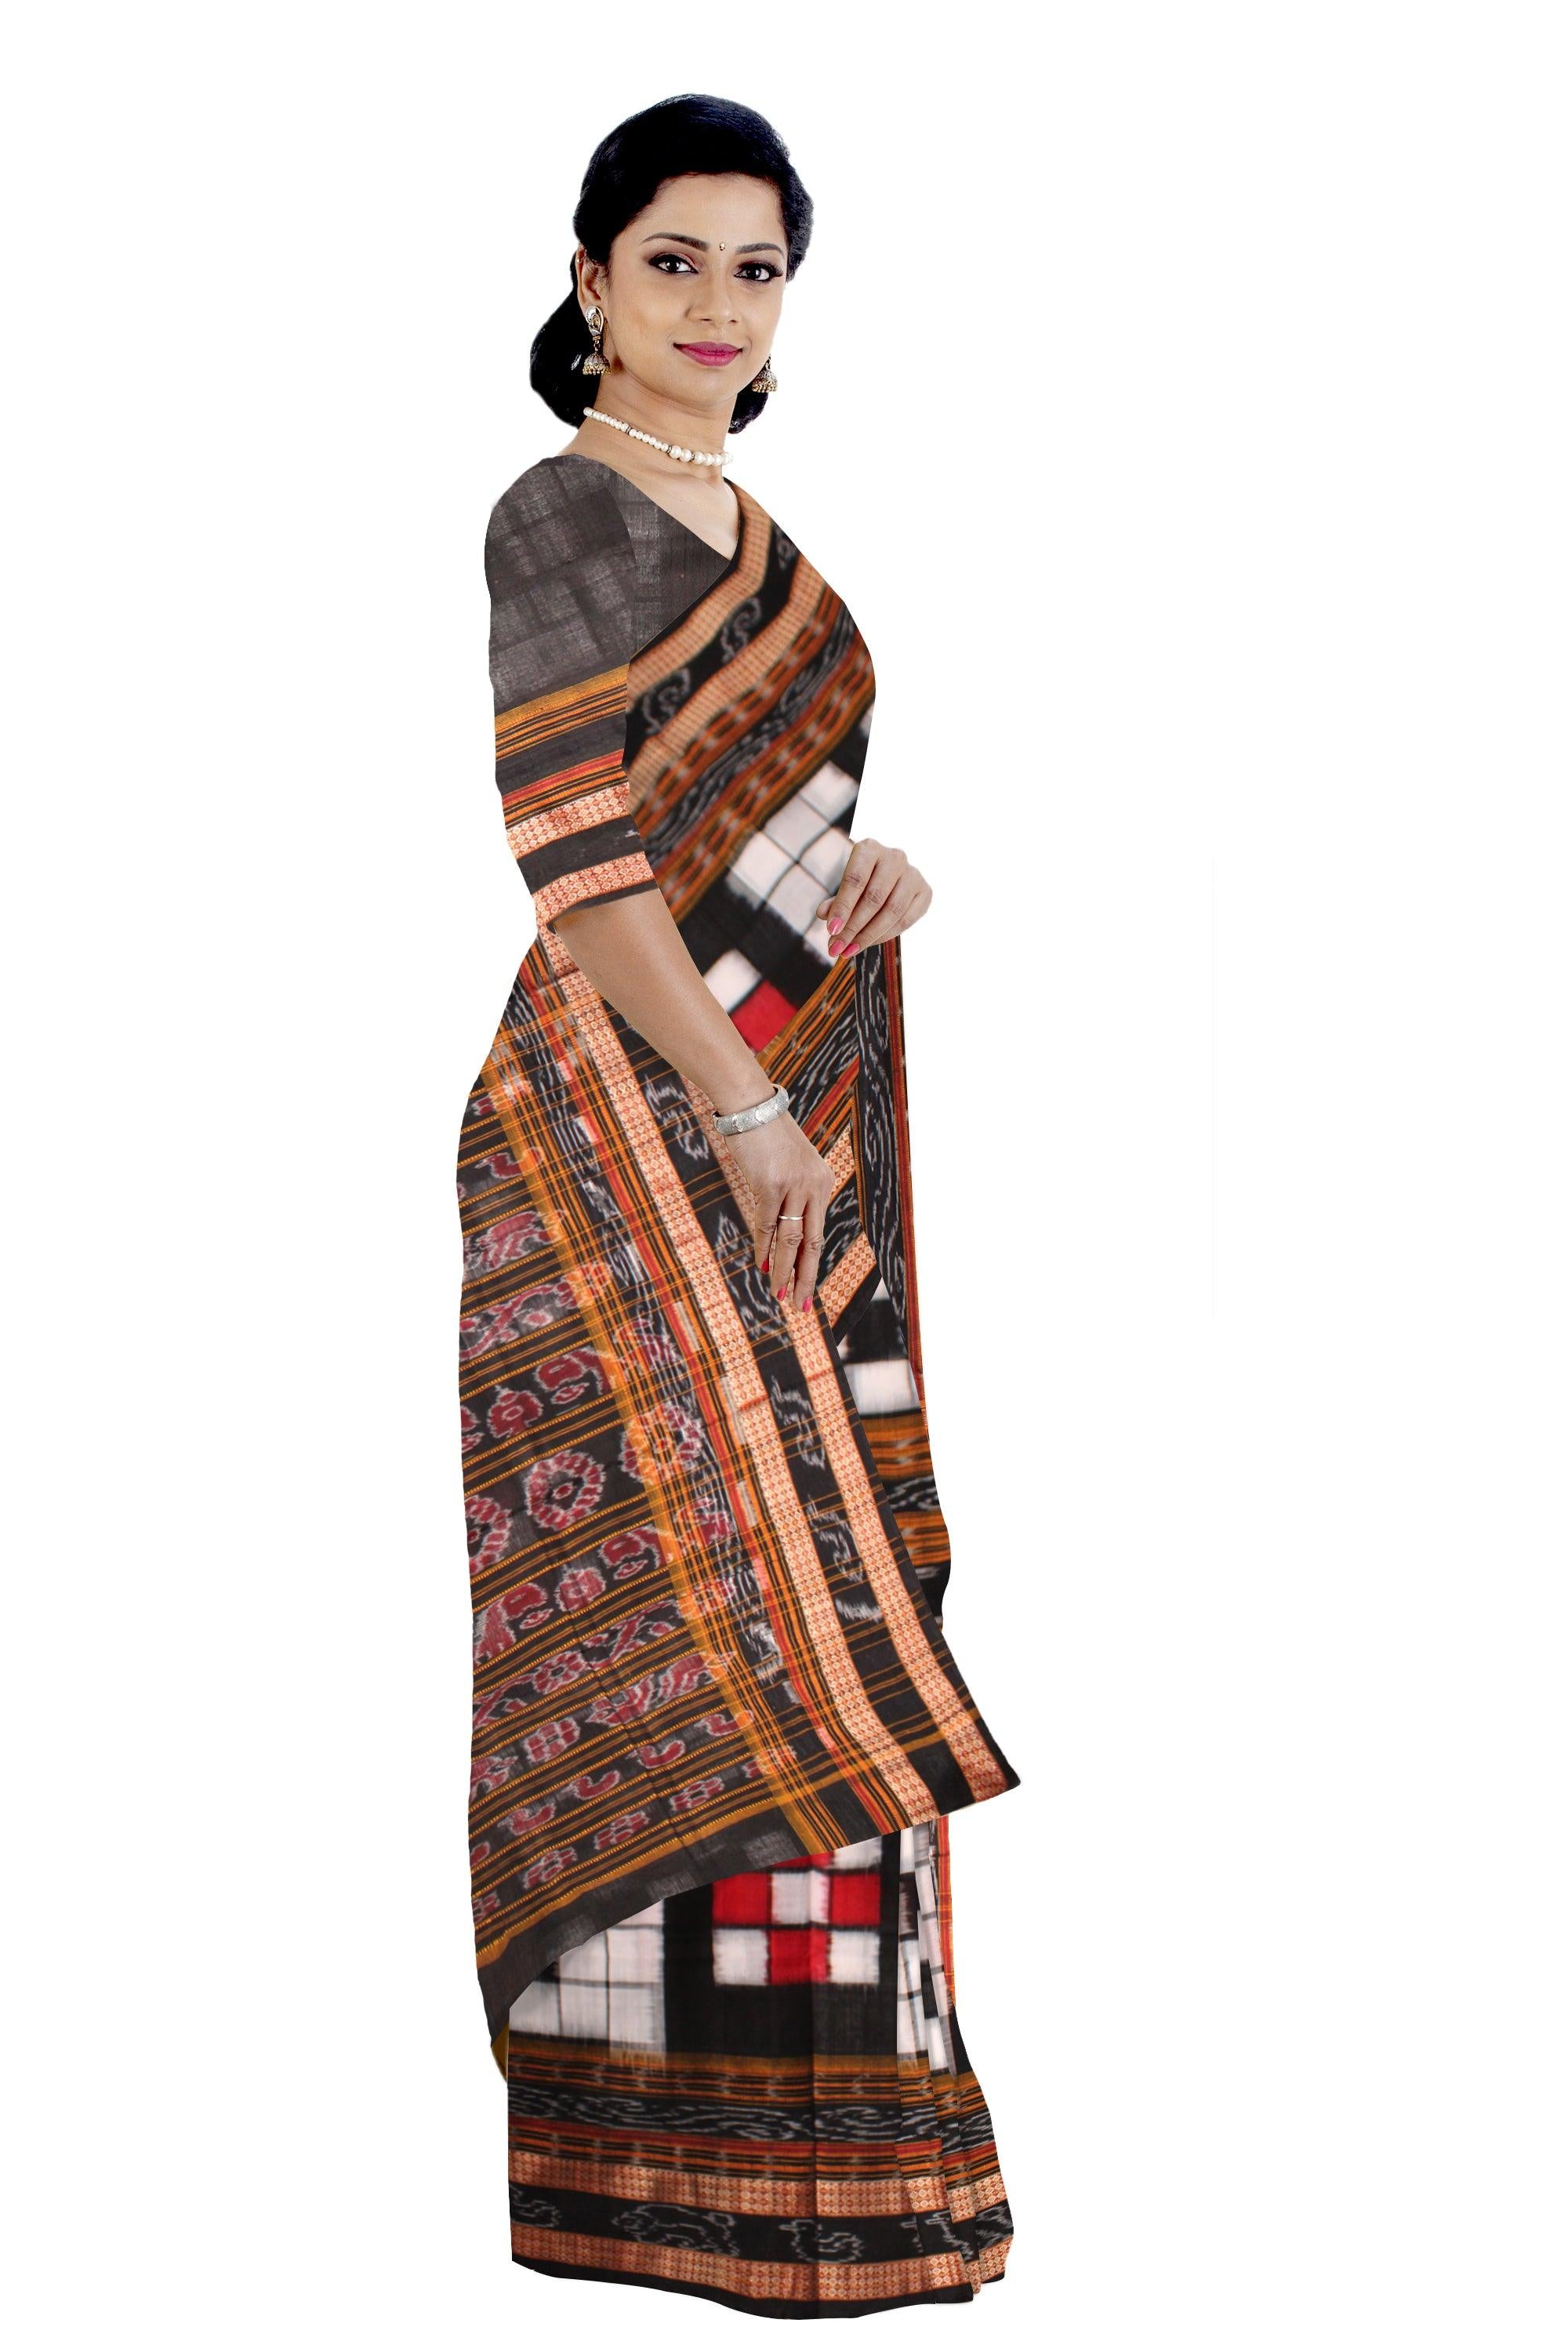 PasaPali design Black and White colour Sambalpuri  cotton saree with out blouse piece. - Koshali Arts & Crafts Enterprise